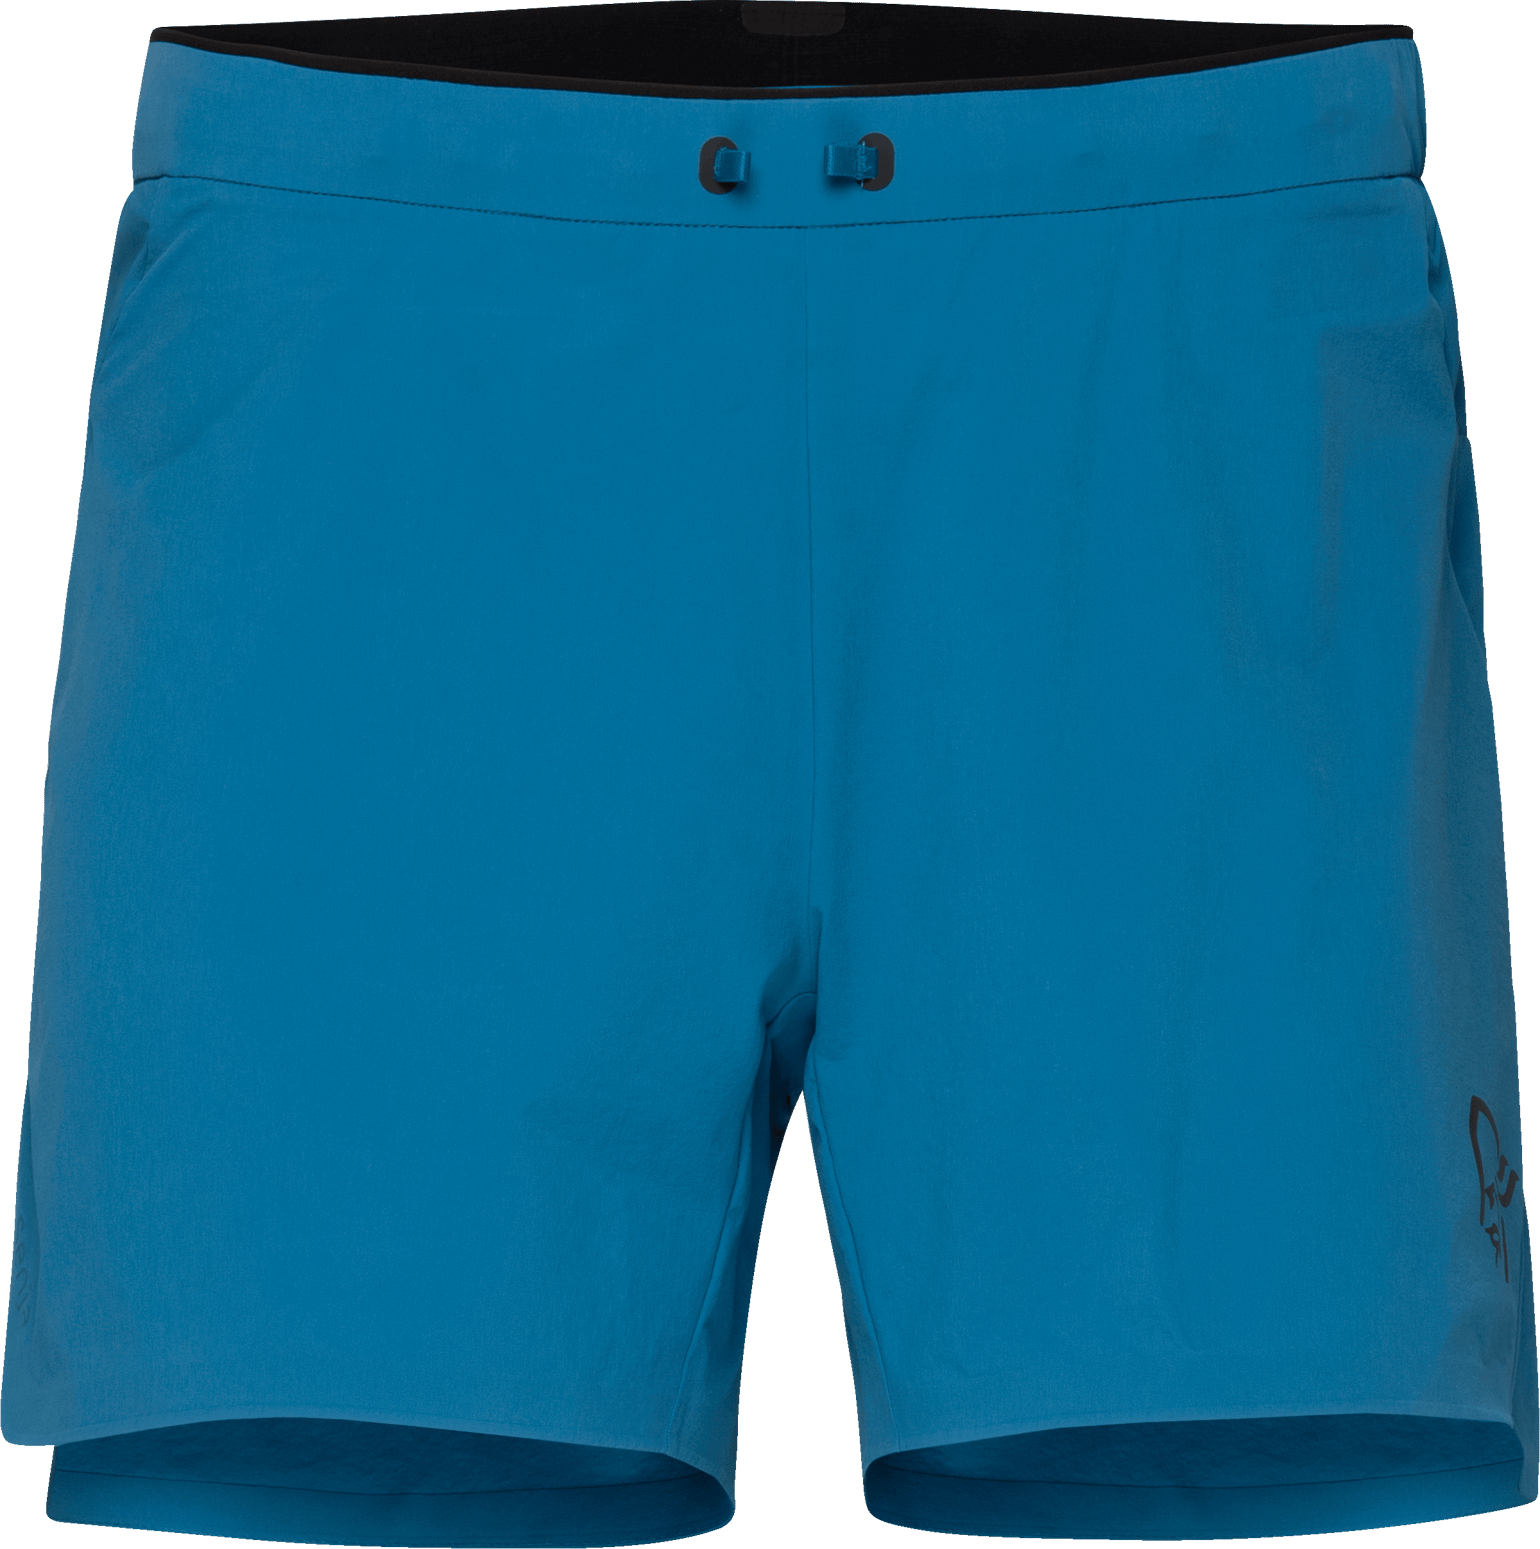 Norrøna Senja Flex1 5'' Shorts M'S Mykonos Blue